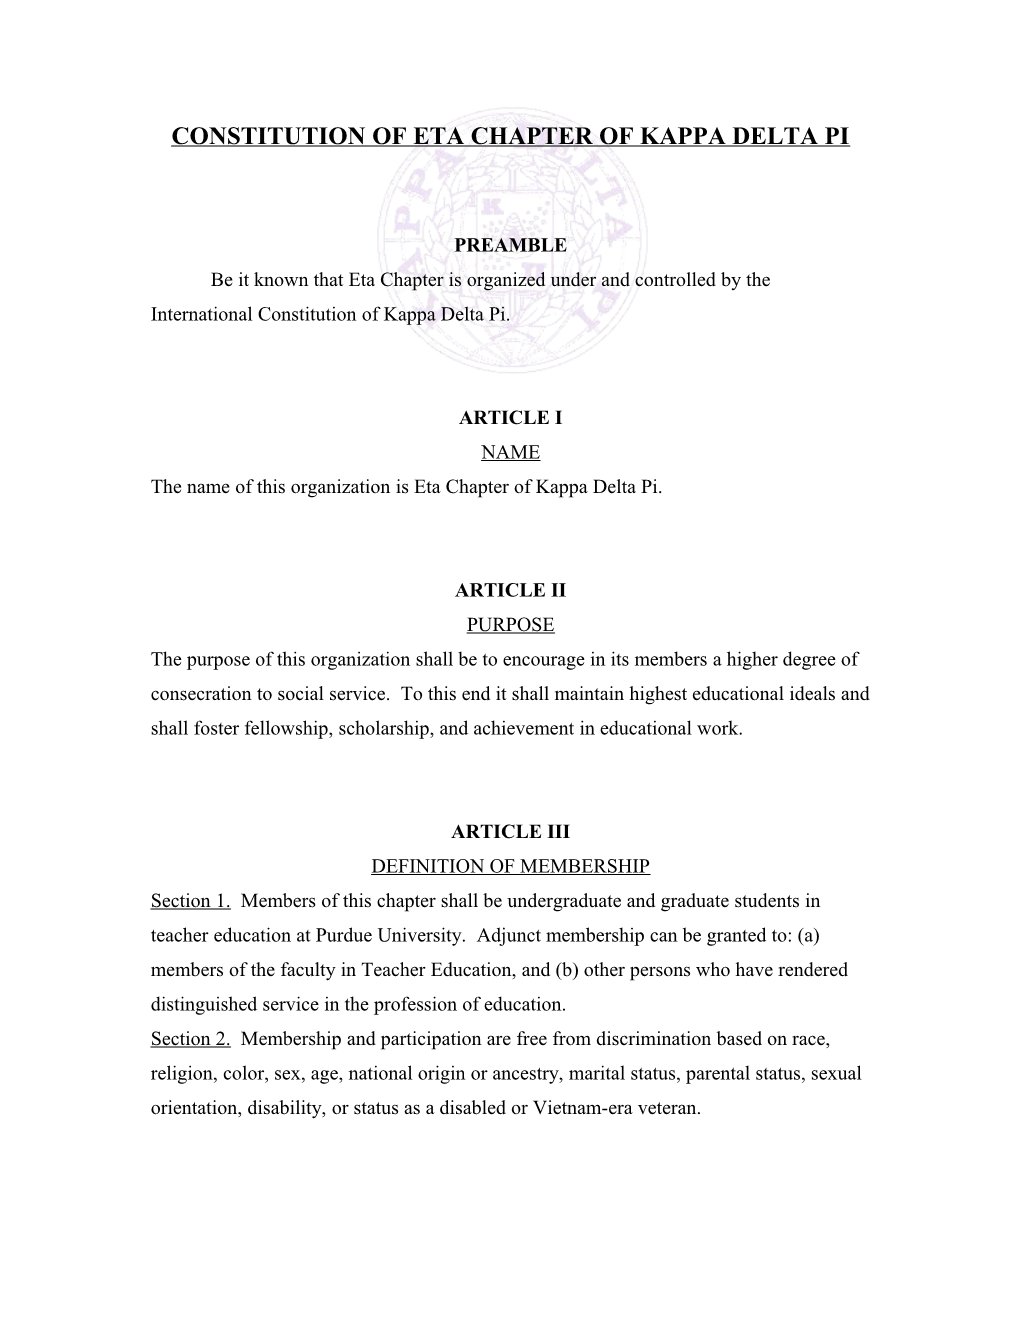 Constitution of Eta Chapter of Kappa Delta Pi